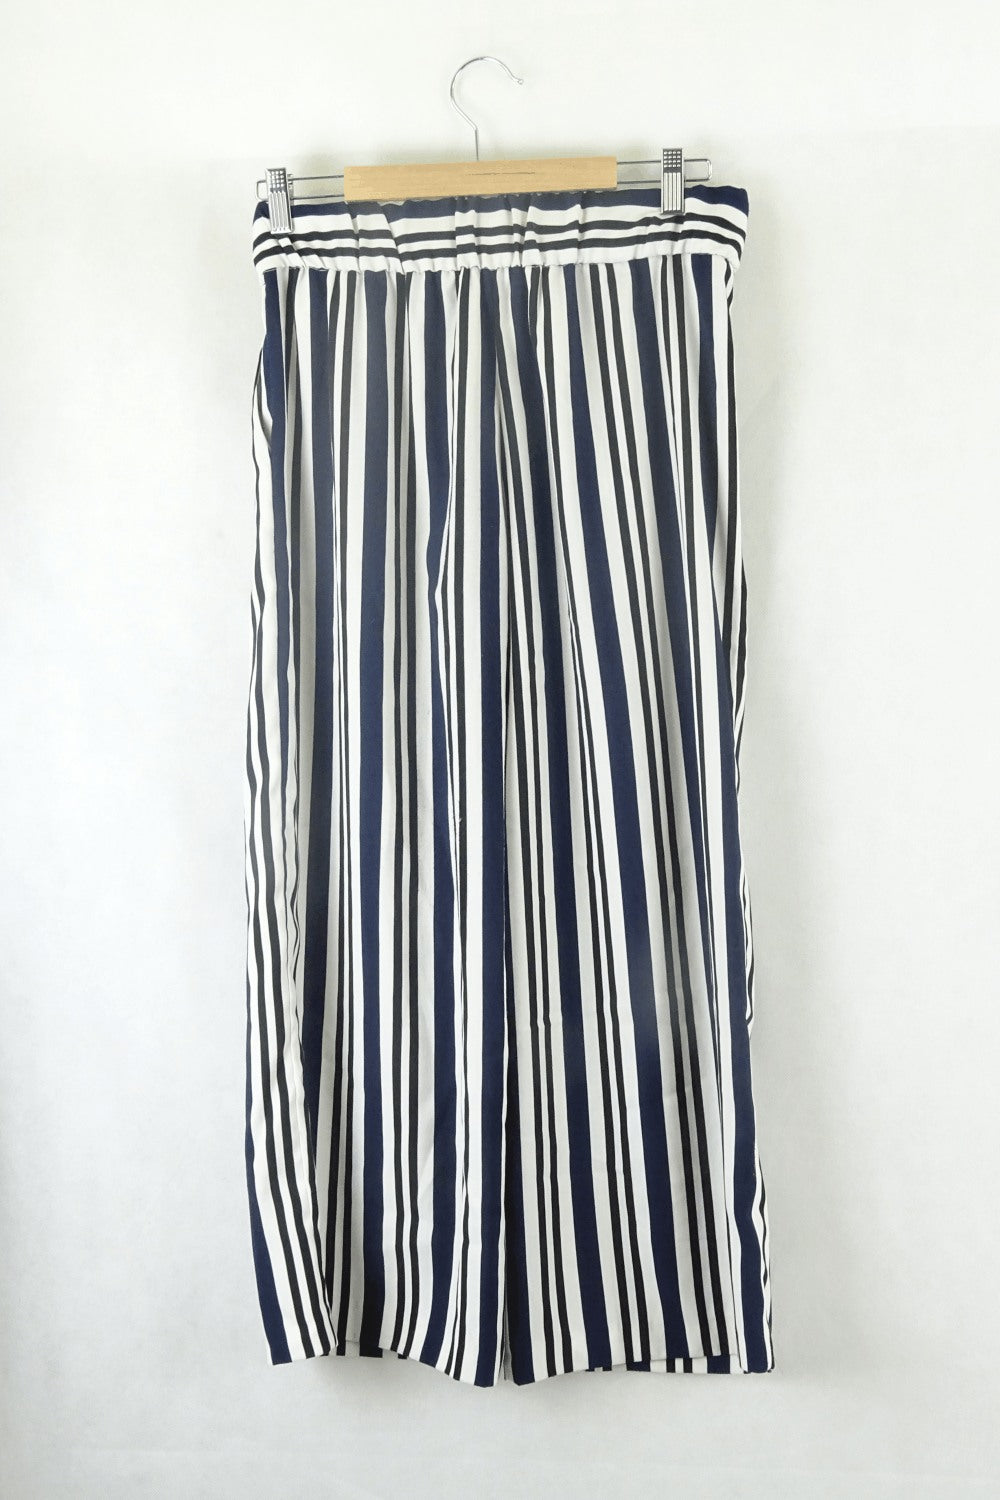 Zara Striped Pants Blue and Black S